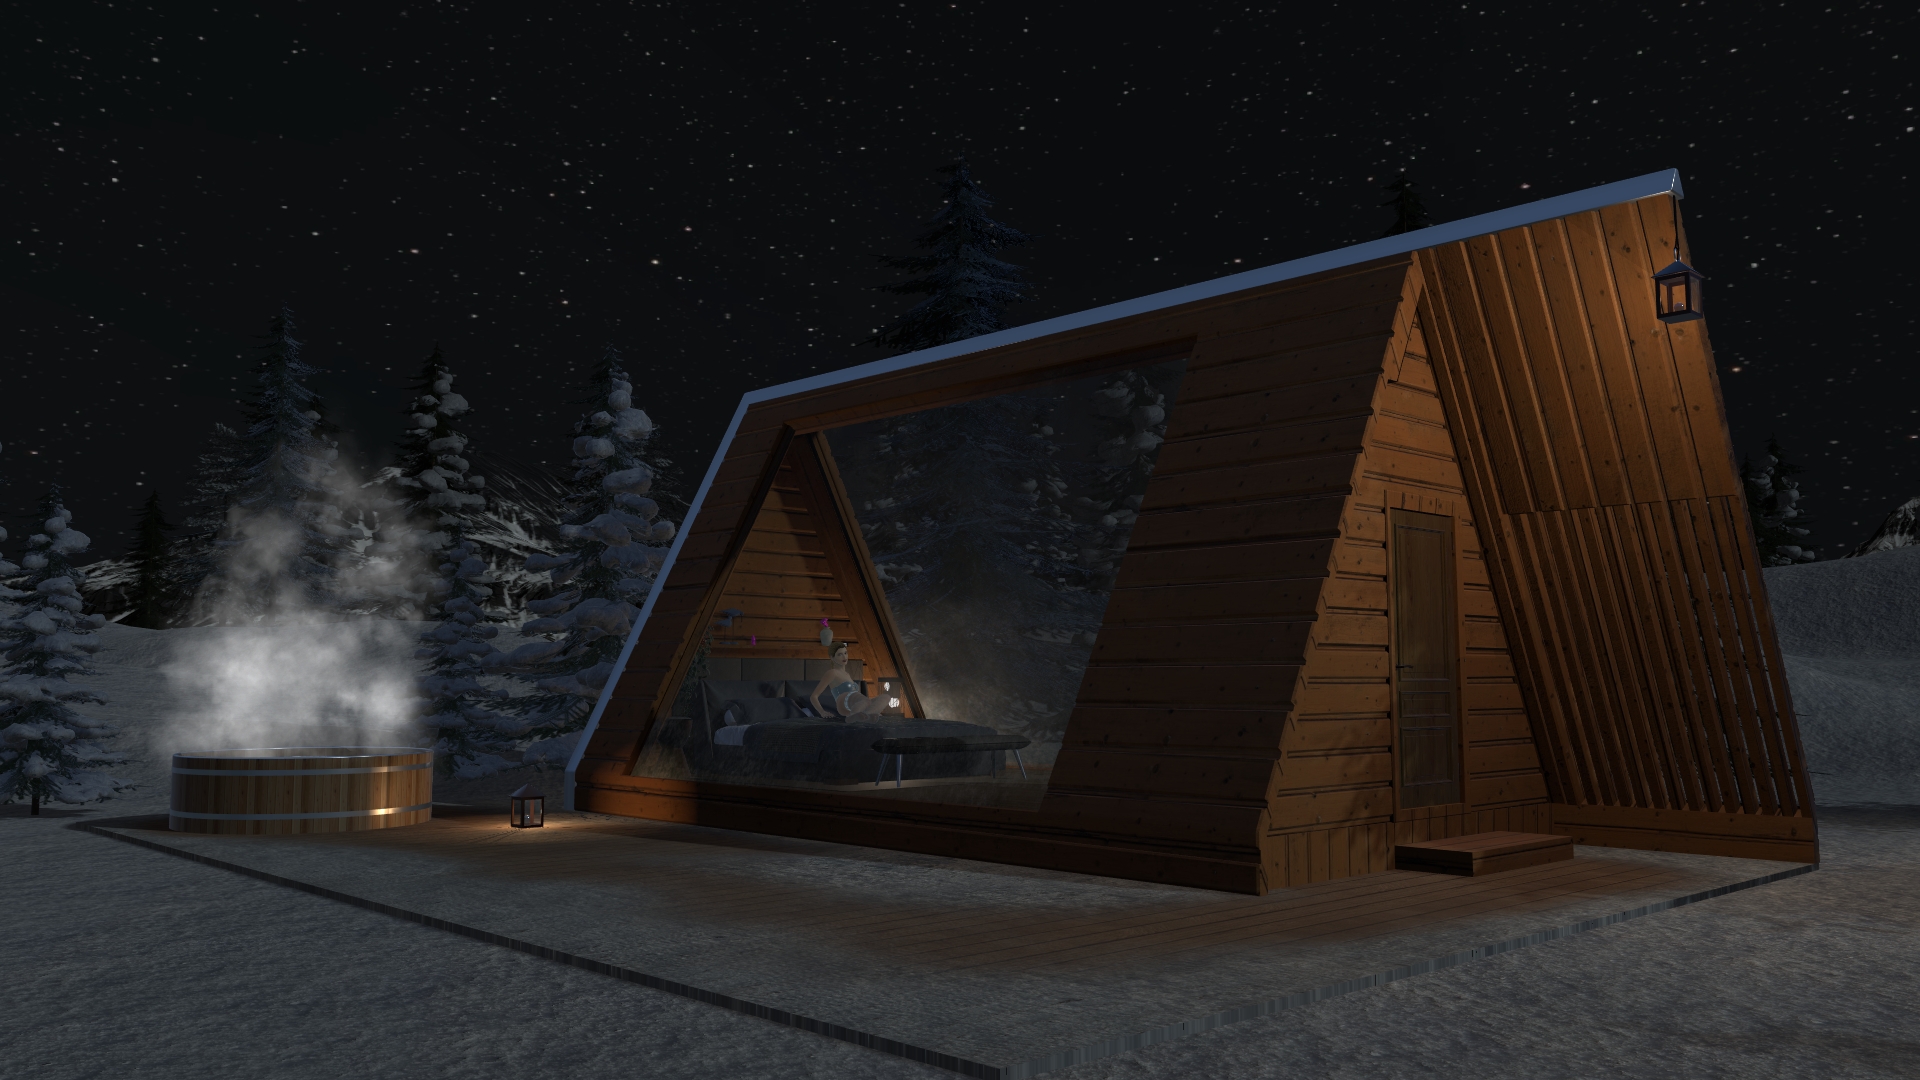 [Scene] Winter Cabin